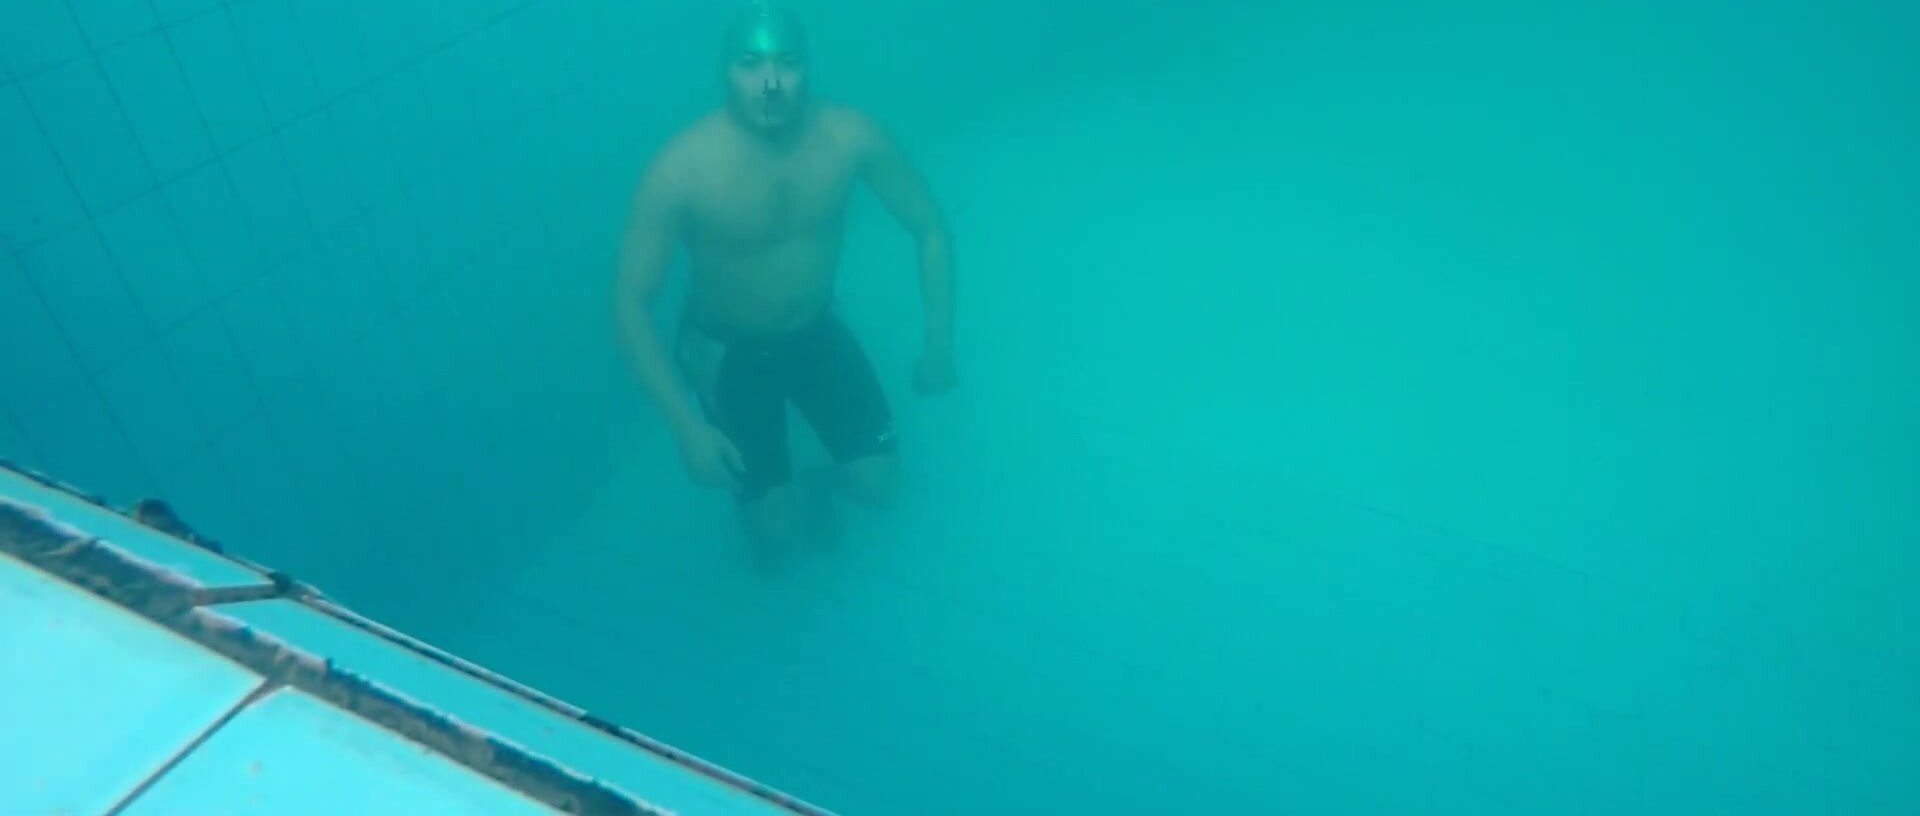 Kareem barefaced underwater with a friend